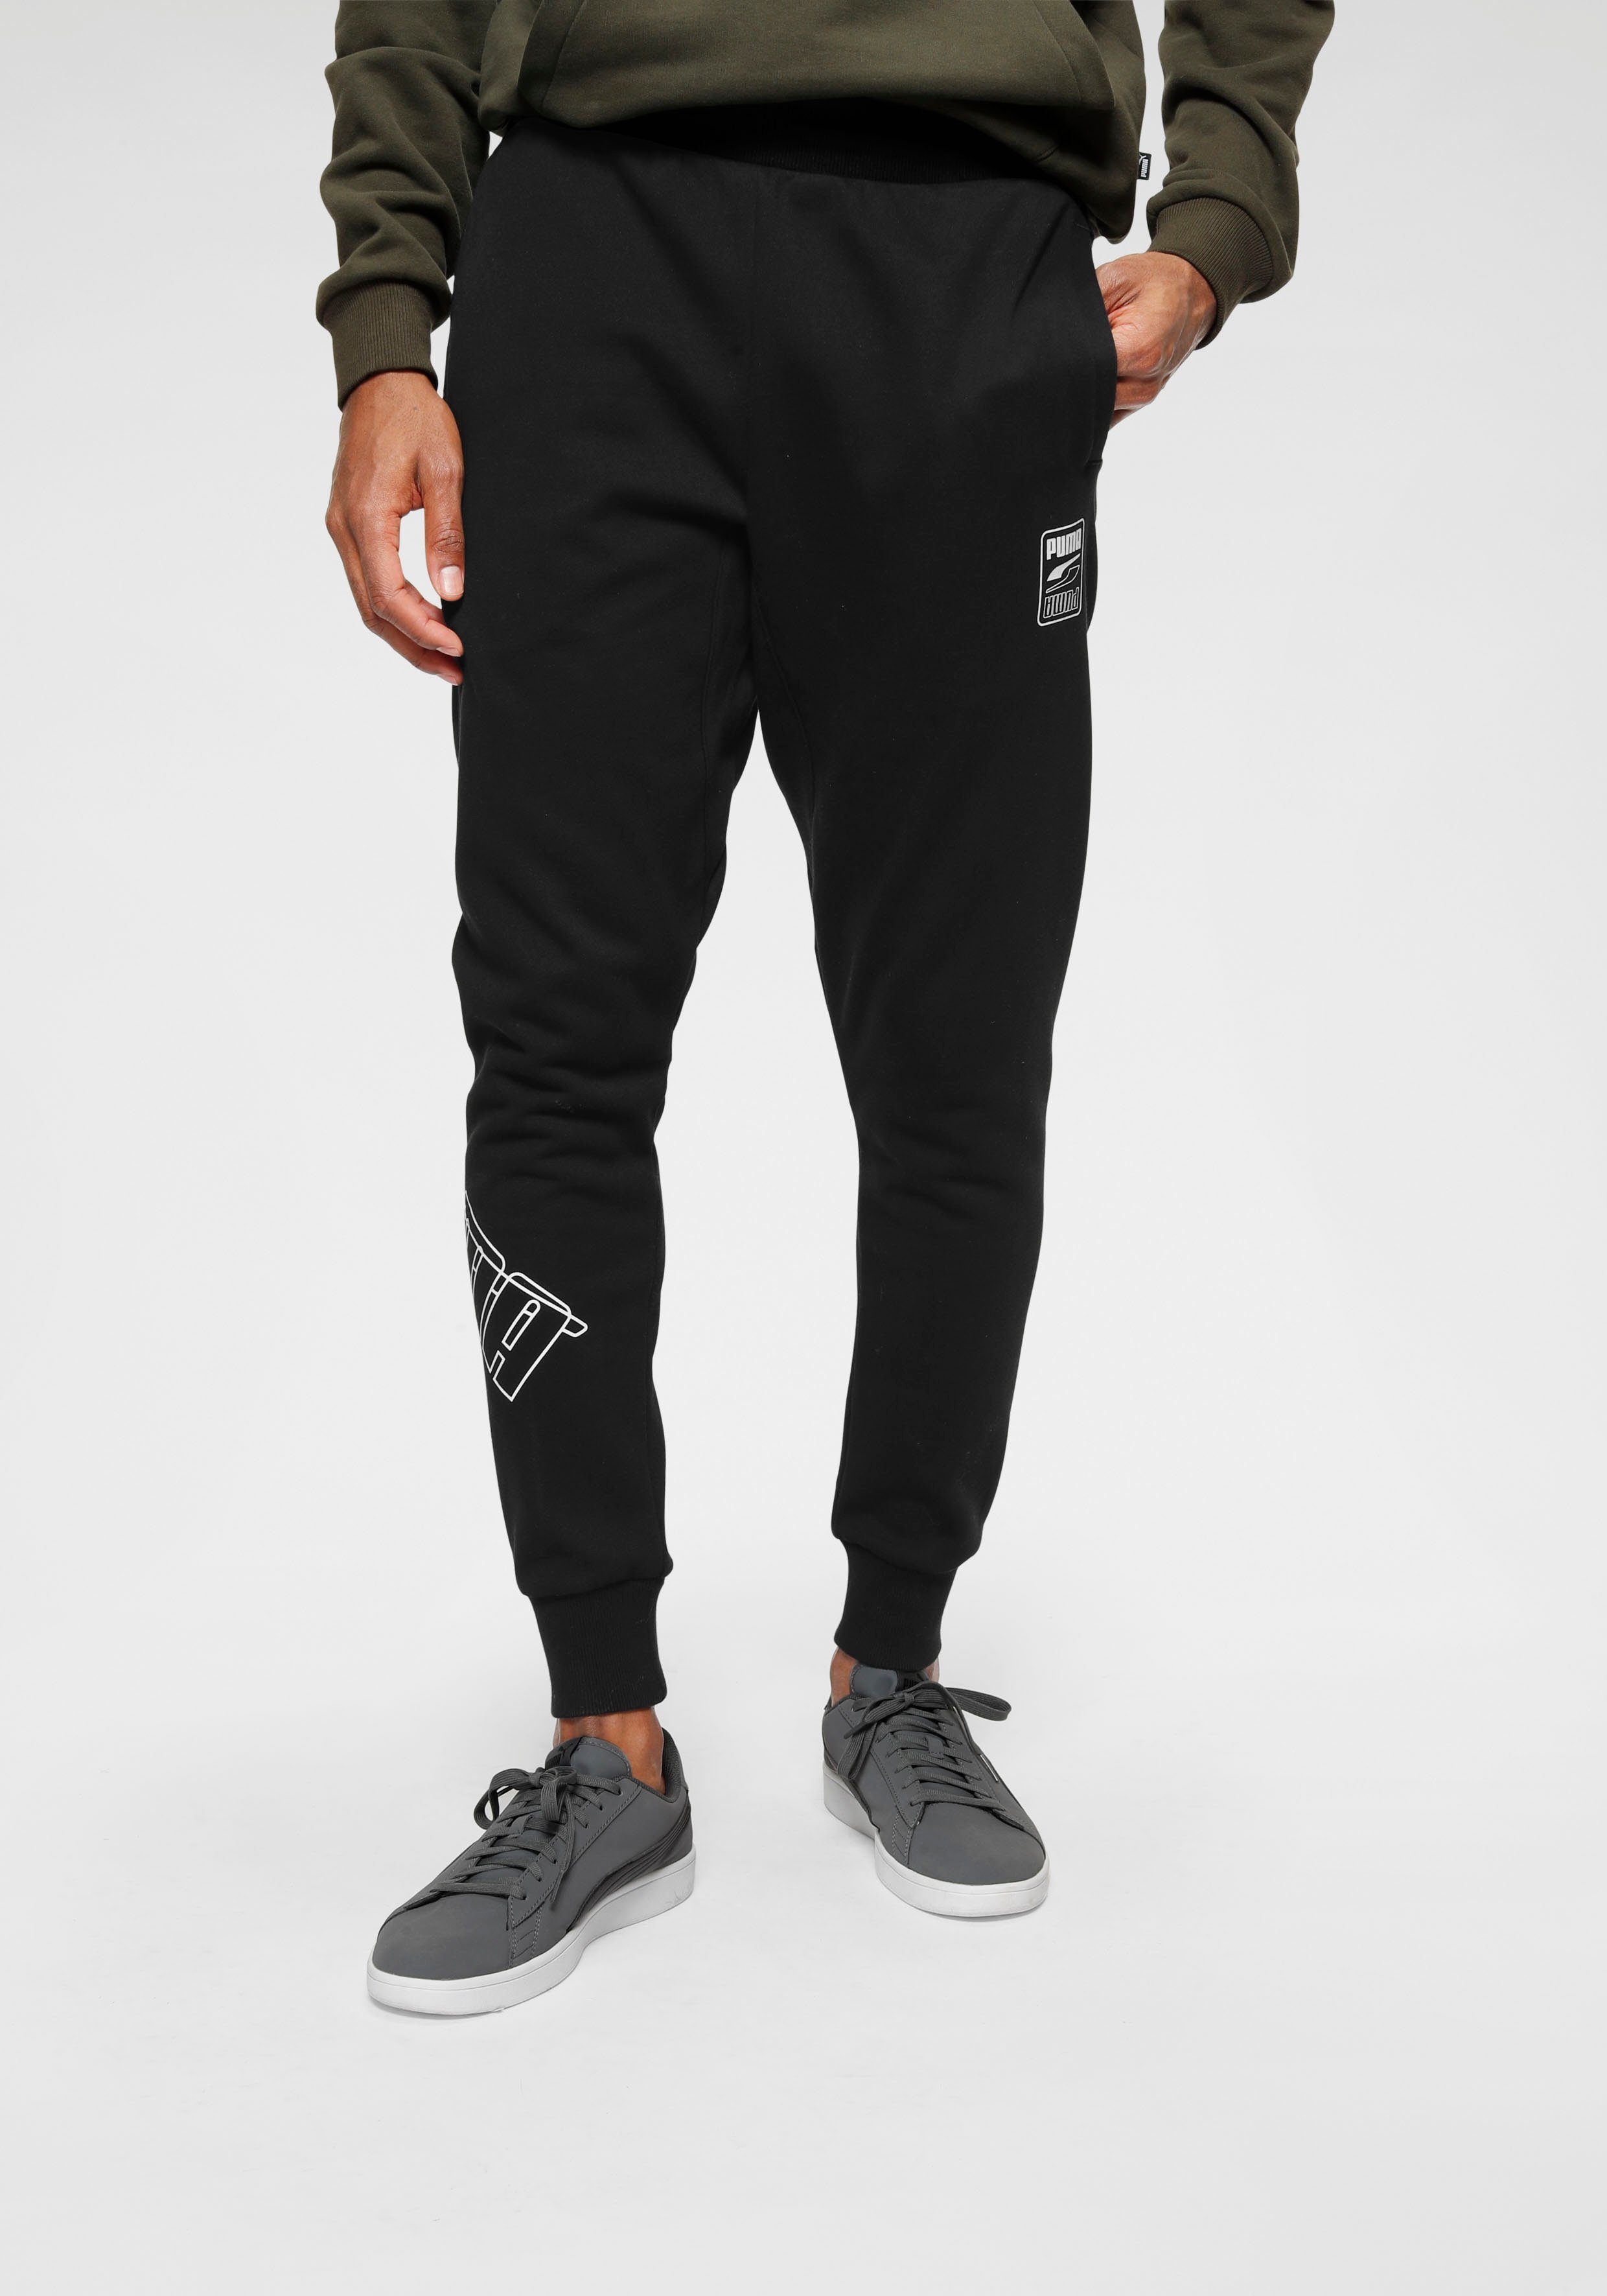 PUMA Jogginghose »Rebel Pants Bold FL cl« kaufen | OTTO